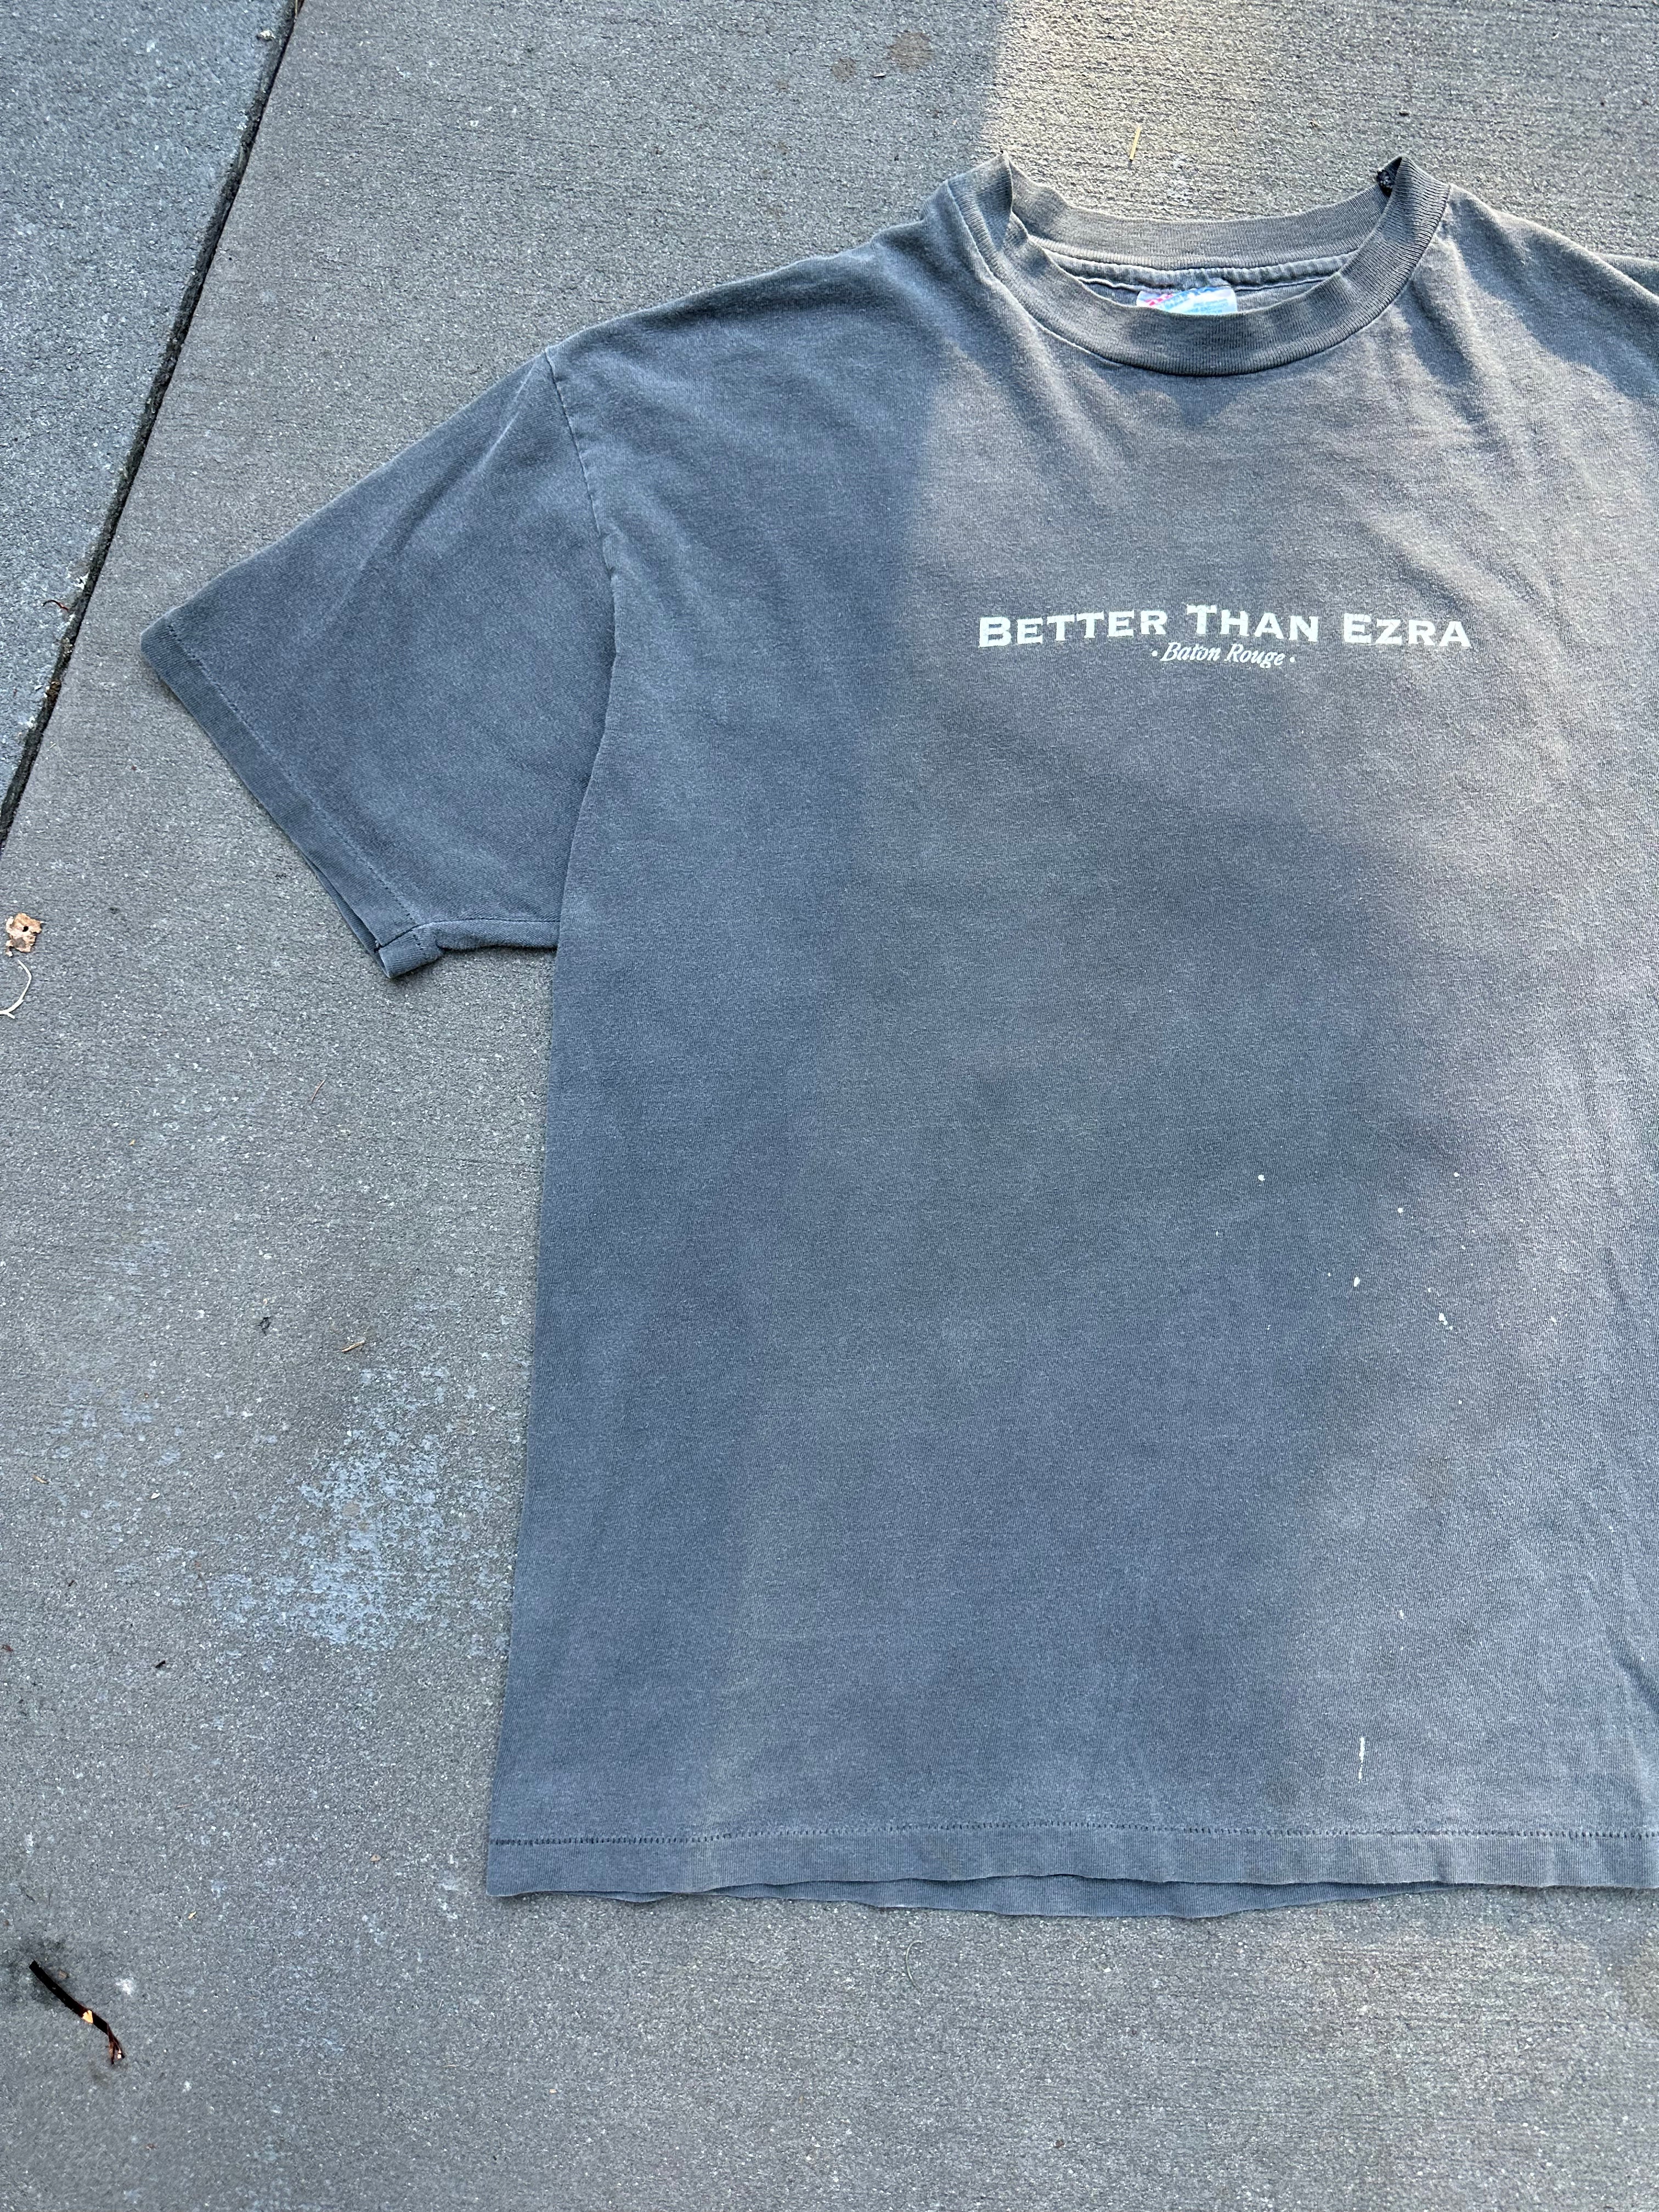 1990s Better Than Ezra Baton Rouge T-Shirt (L/XL)